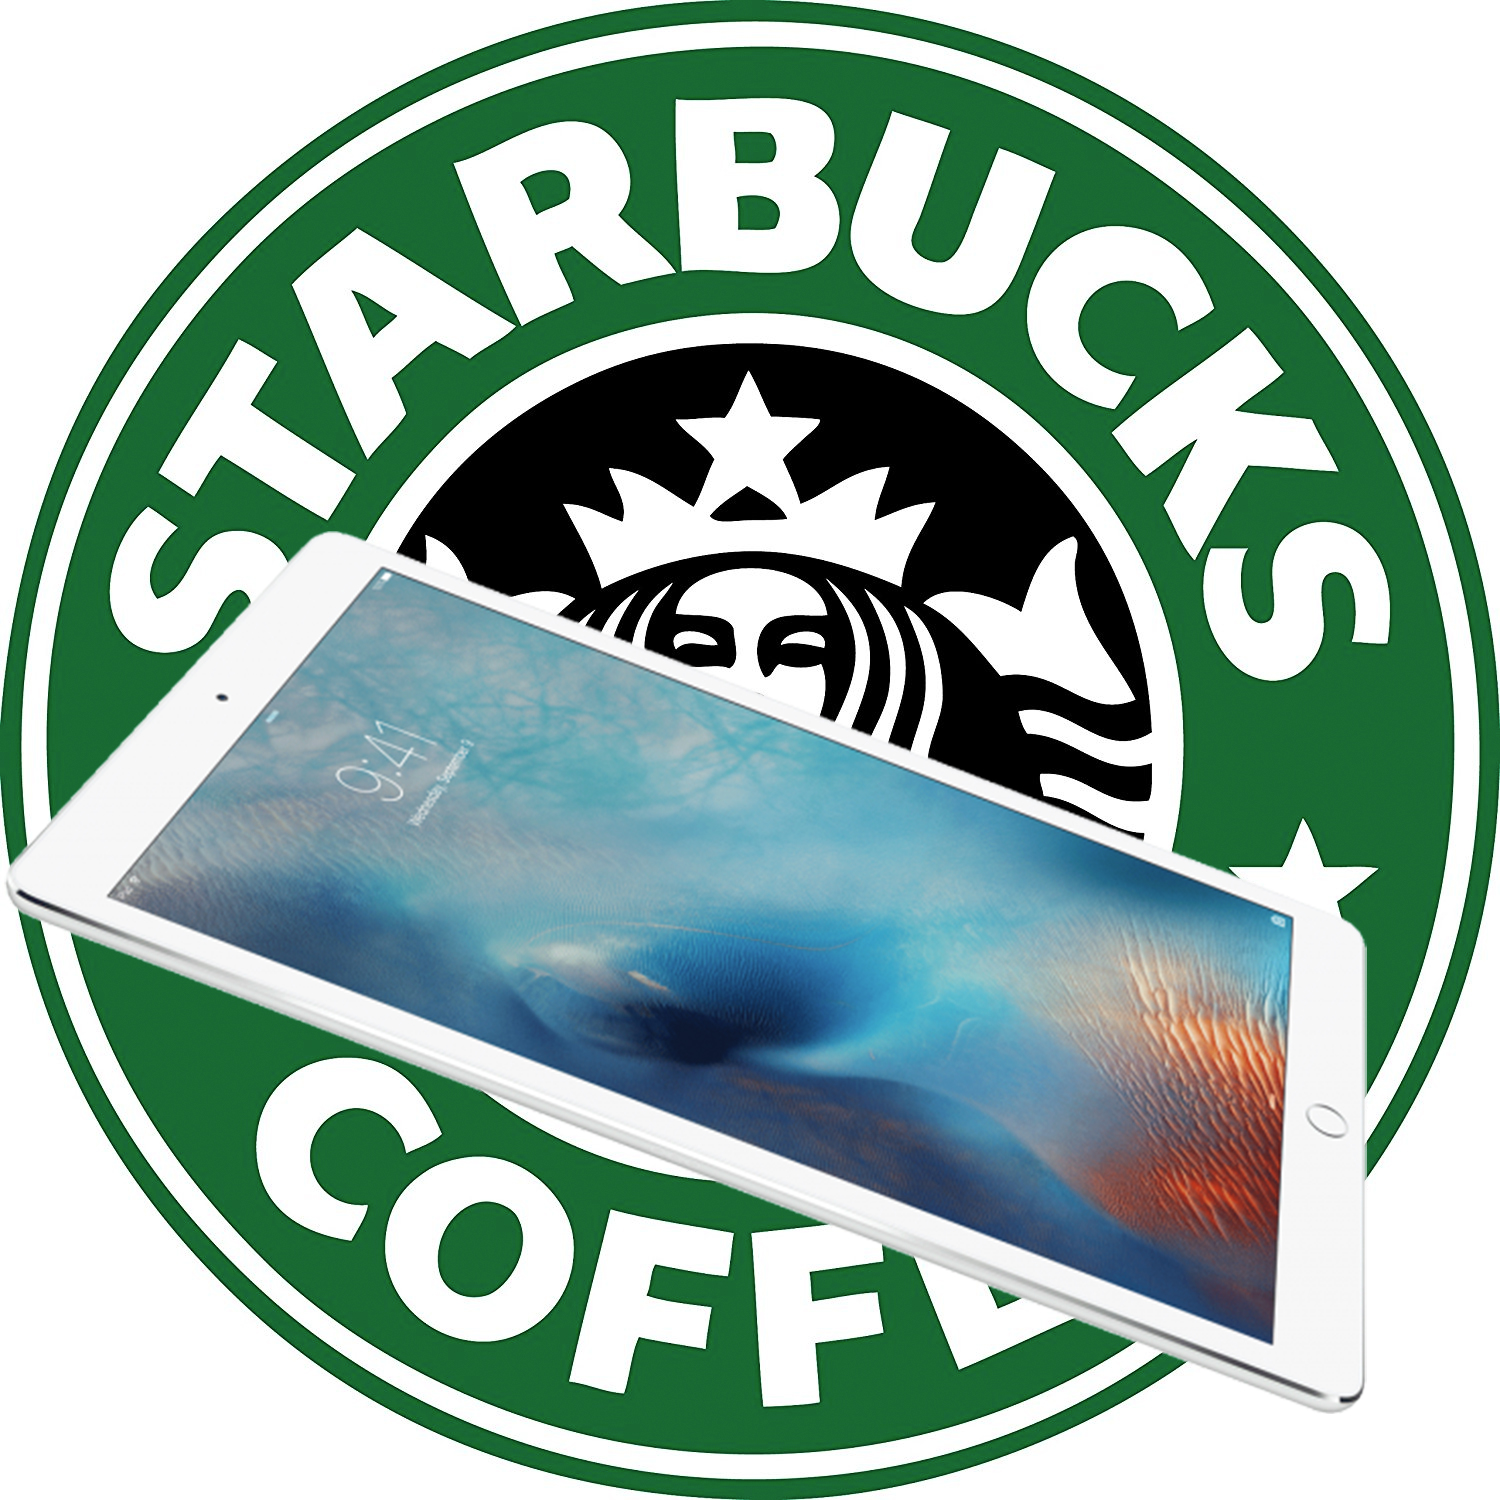 iPad y logo de Starbucks